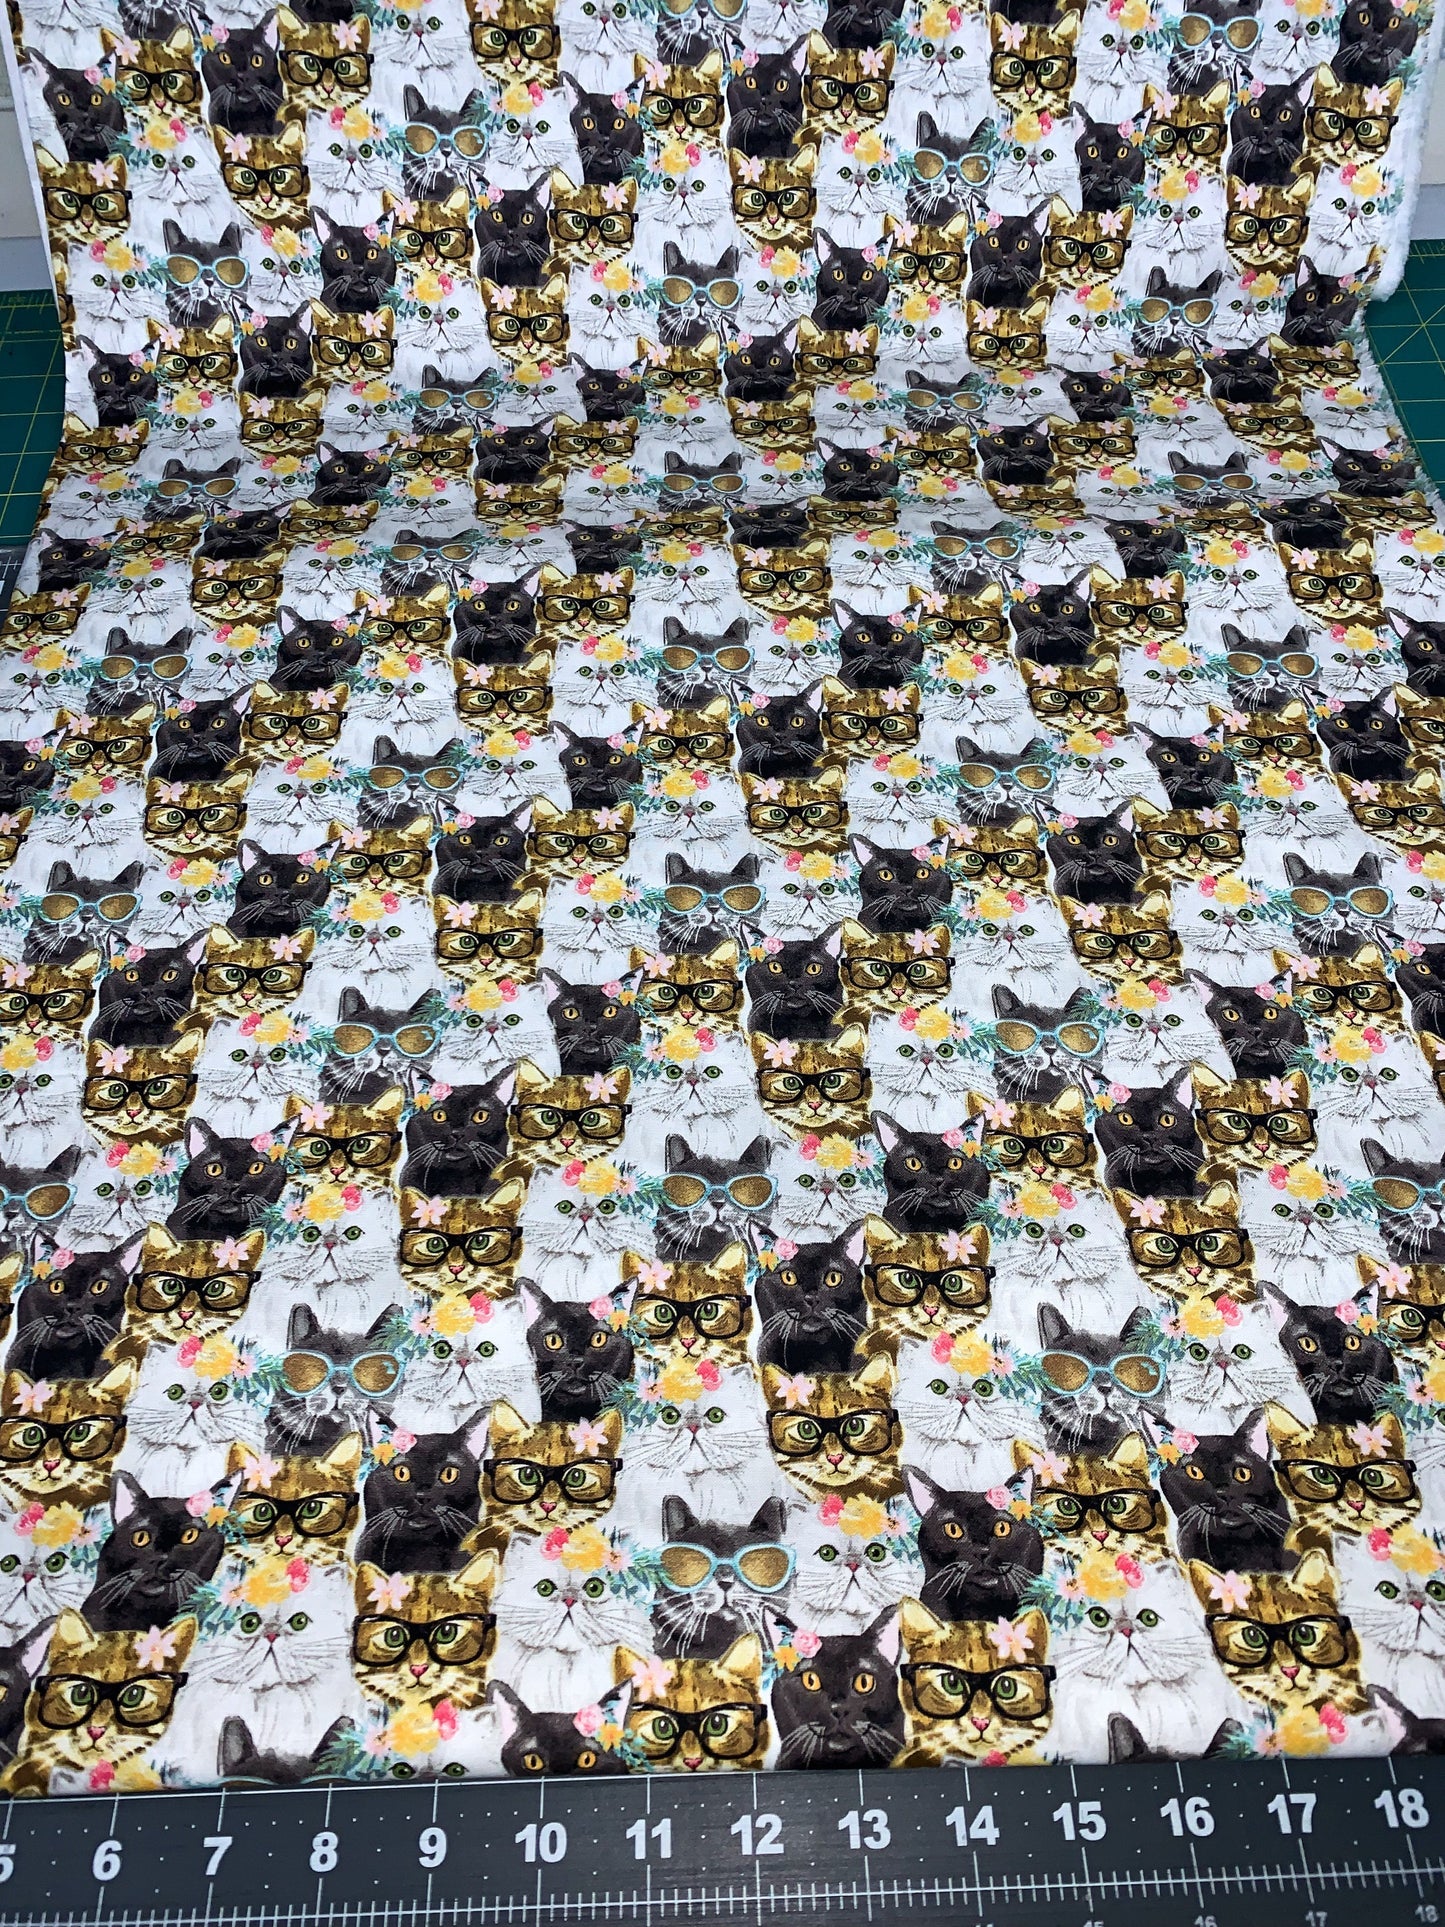 Caturday Cats in Glasses 18040 cat fabric